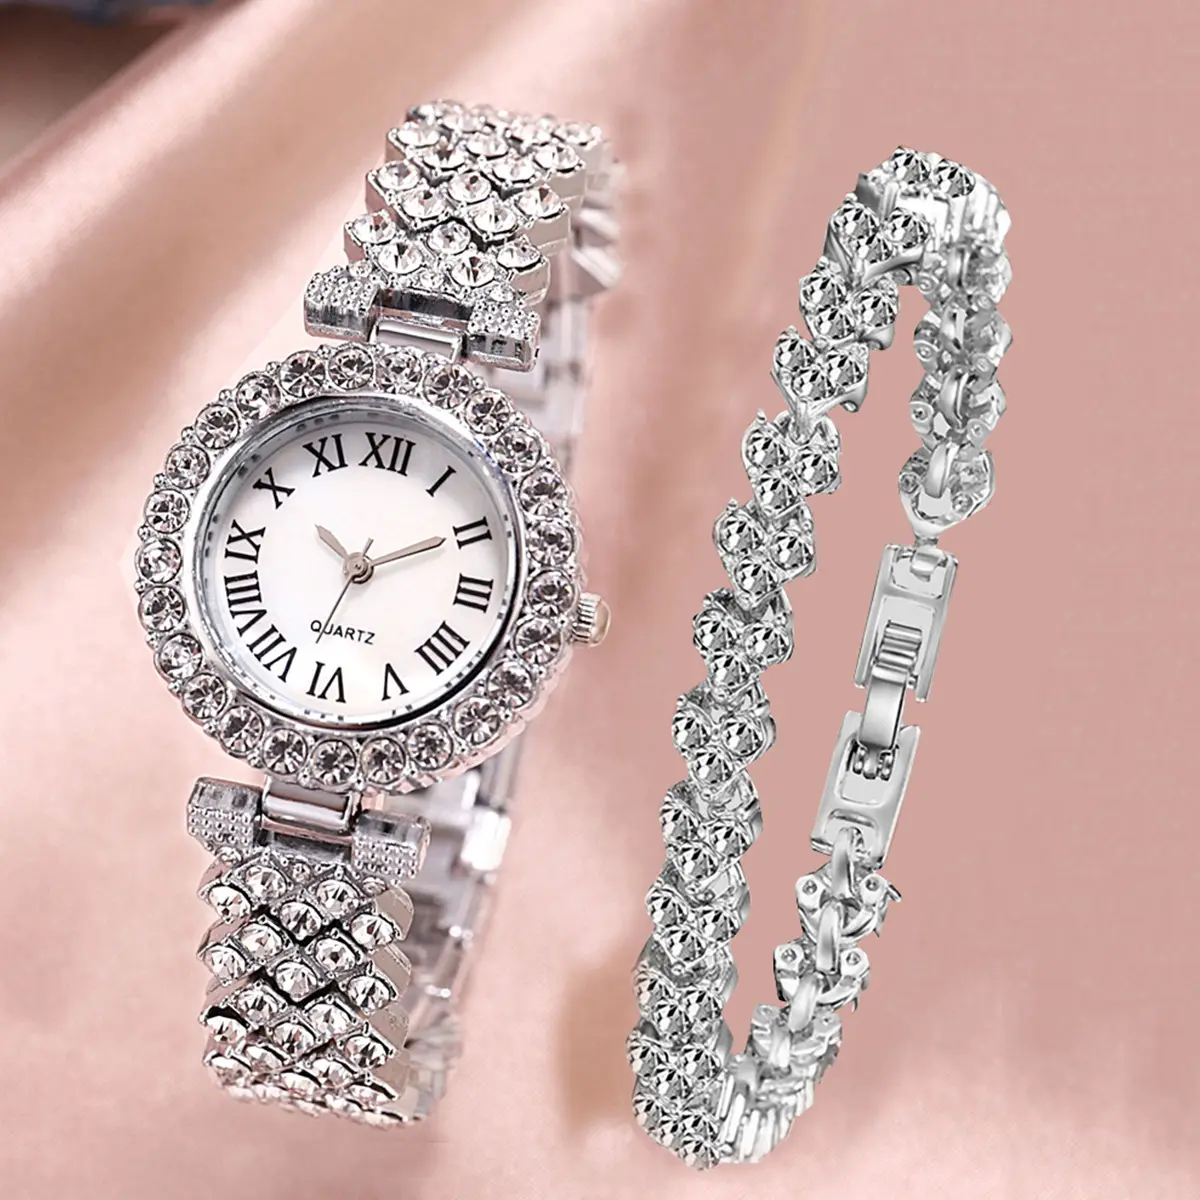 Woman Watches Top Brand, Luxury Popular Small Sphere Silver Jewelry Ladies Watch Color Diamond Bracelet Girls Wrist Watch Gifts/